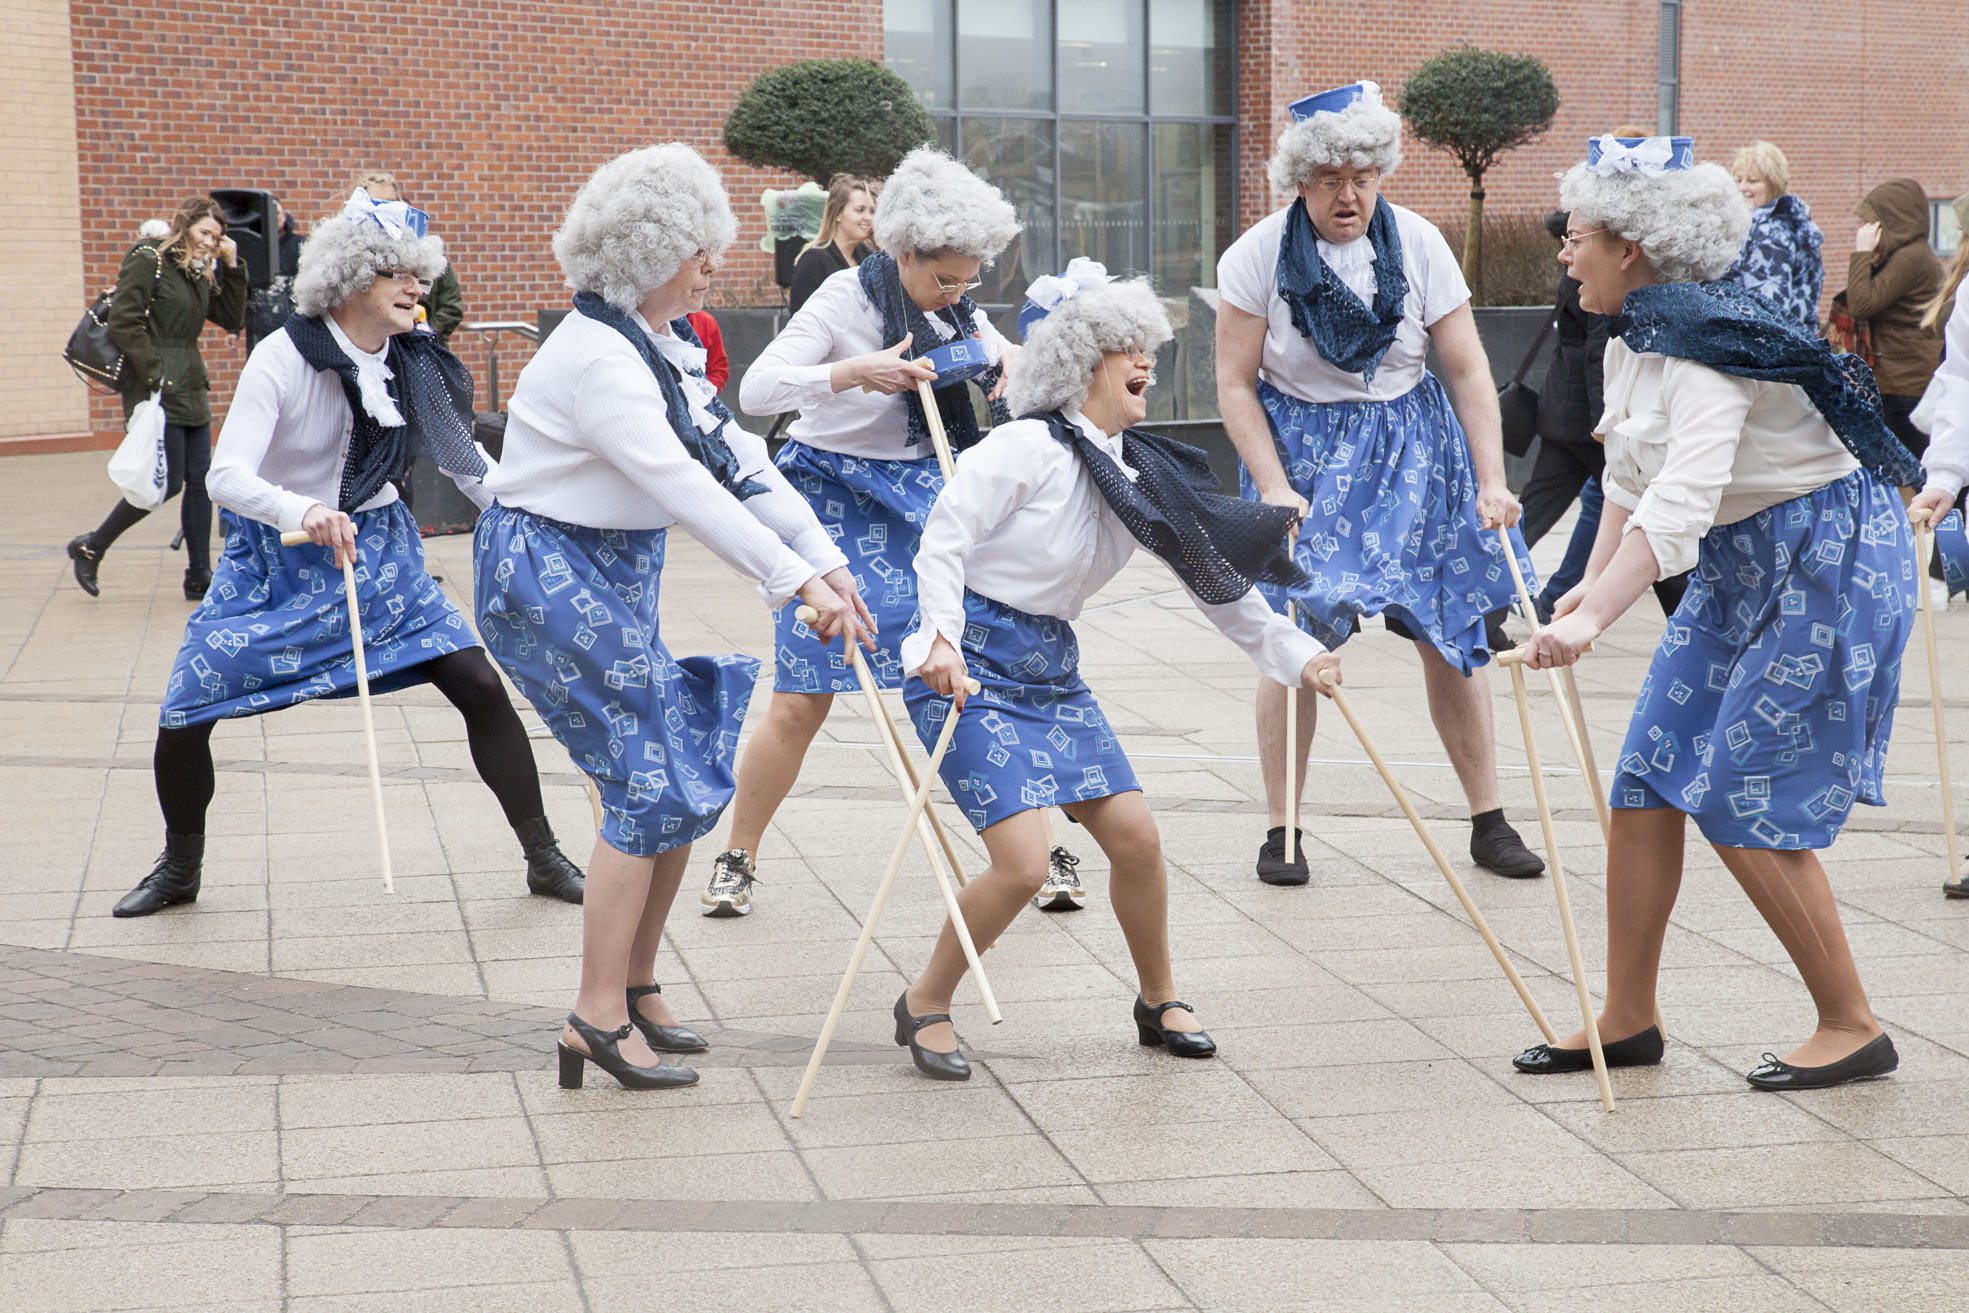 Dancing grannies strut their stuff